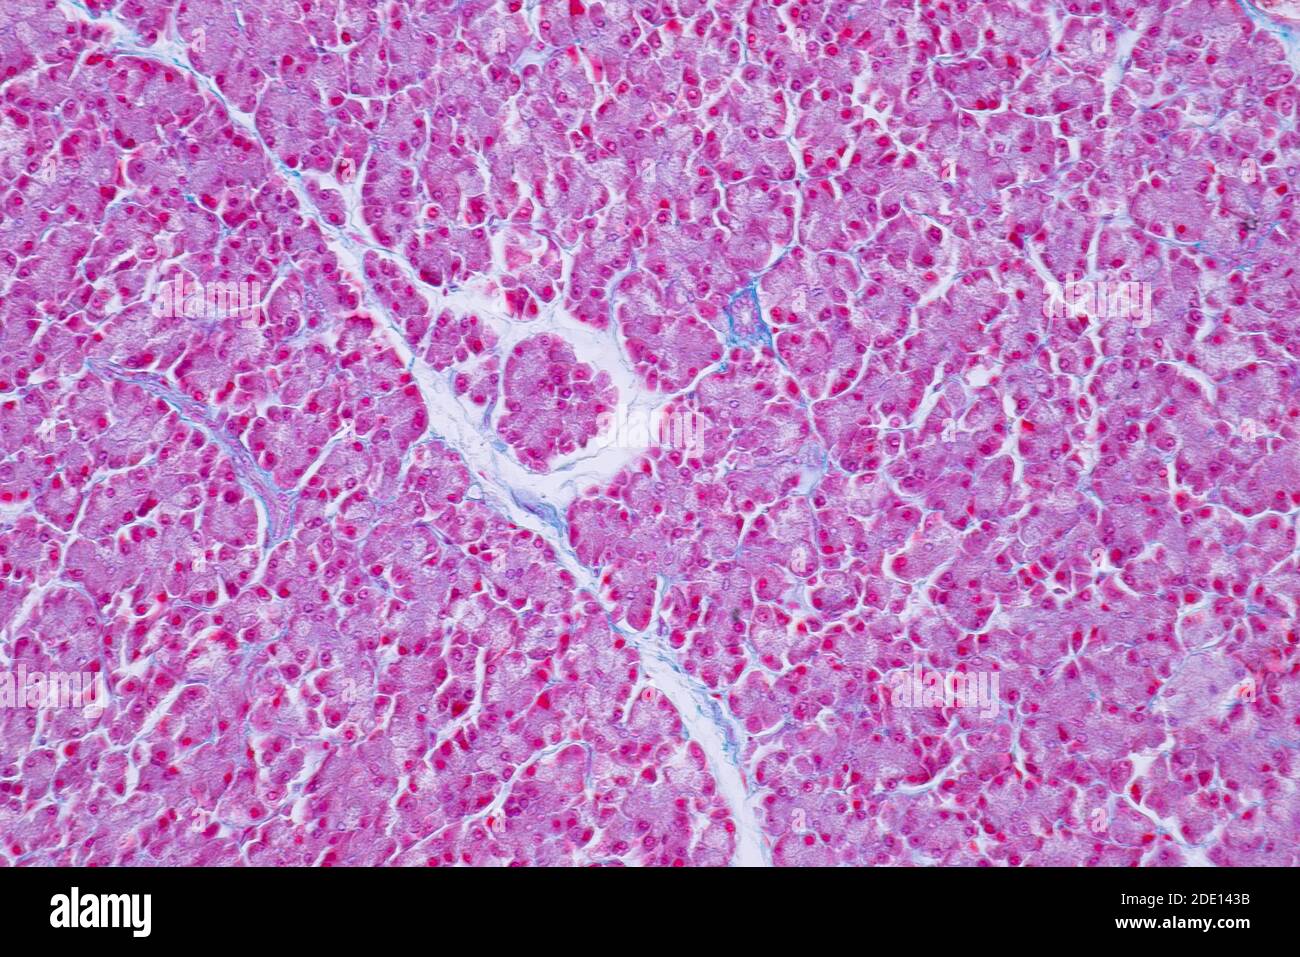 Human liver tissue, light micrograph Stock Photo